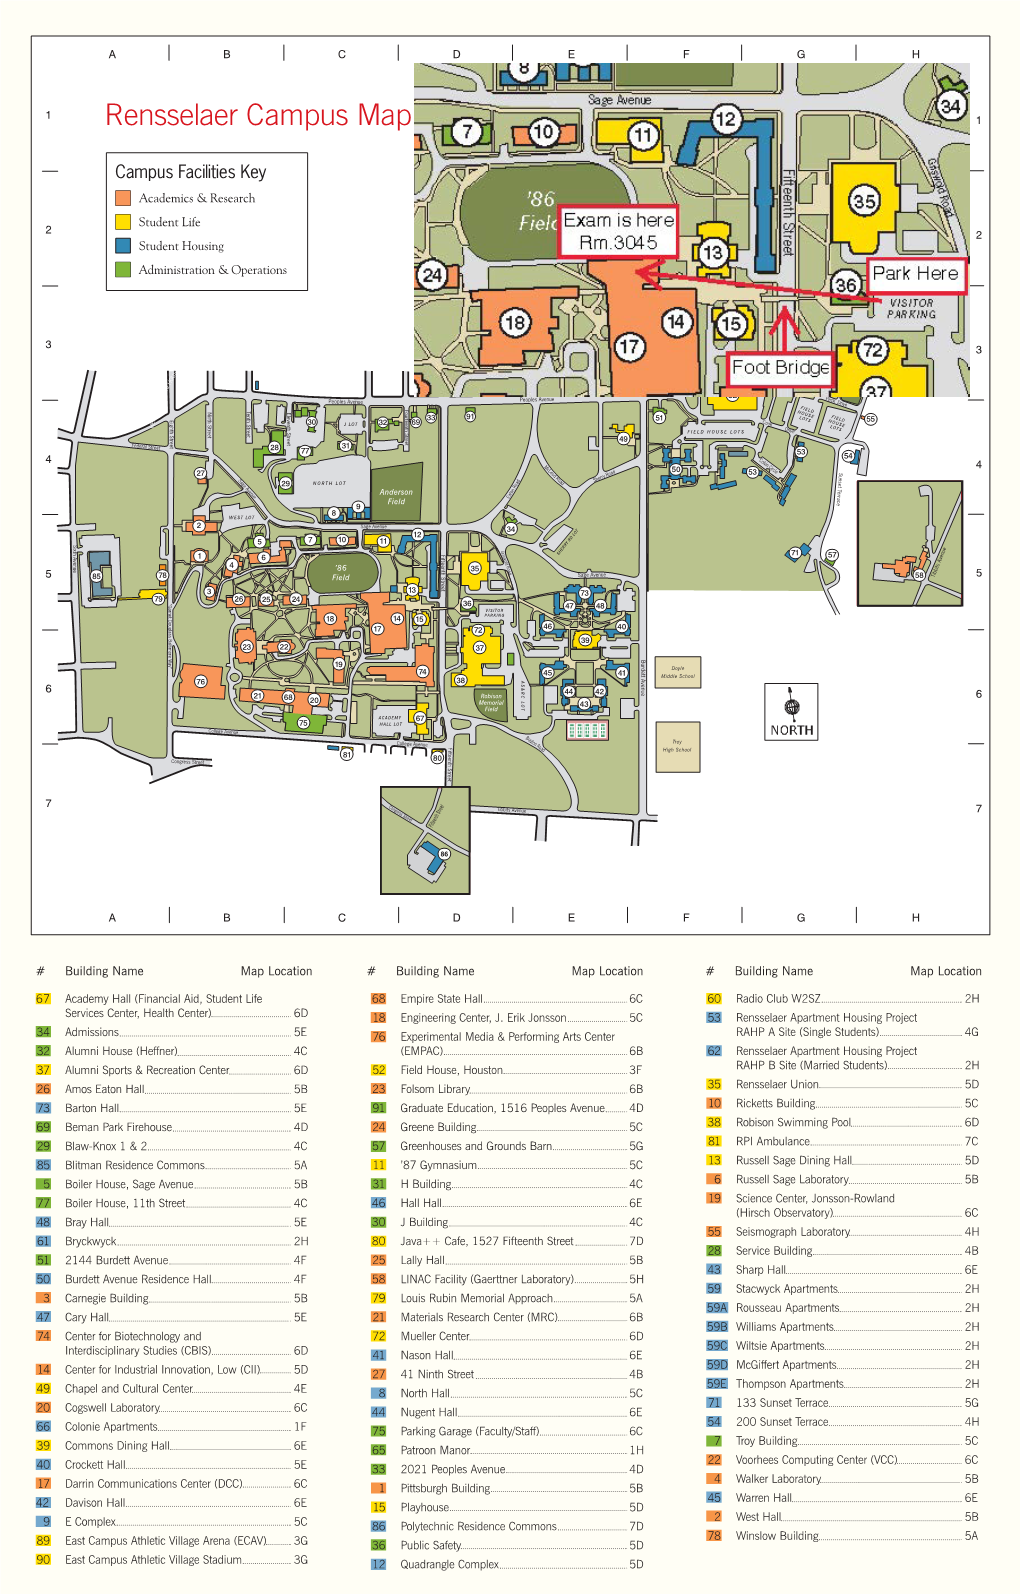 Rensselaer Campus Map 1 66